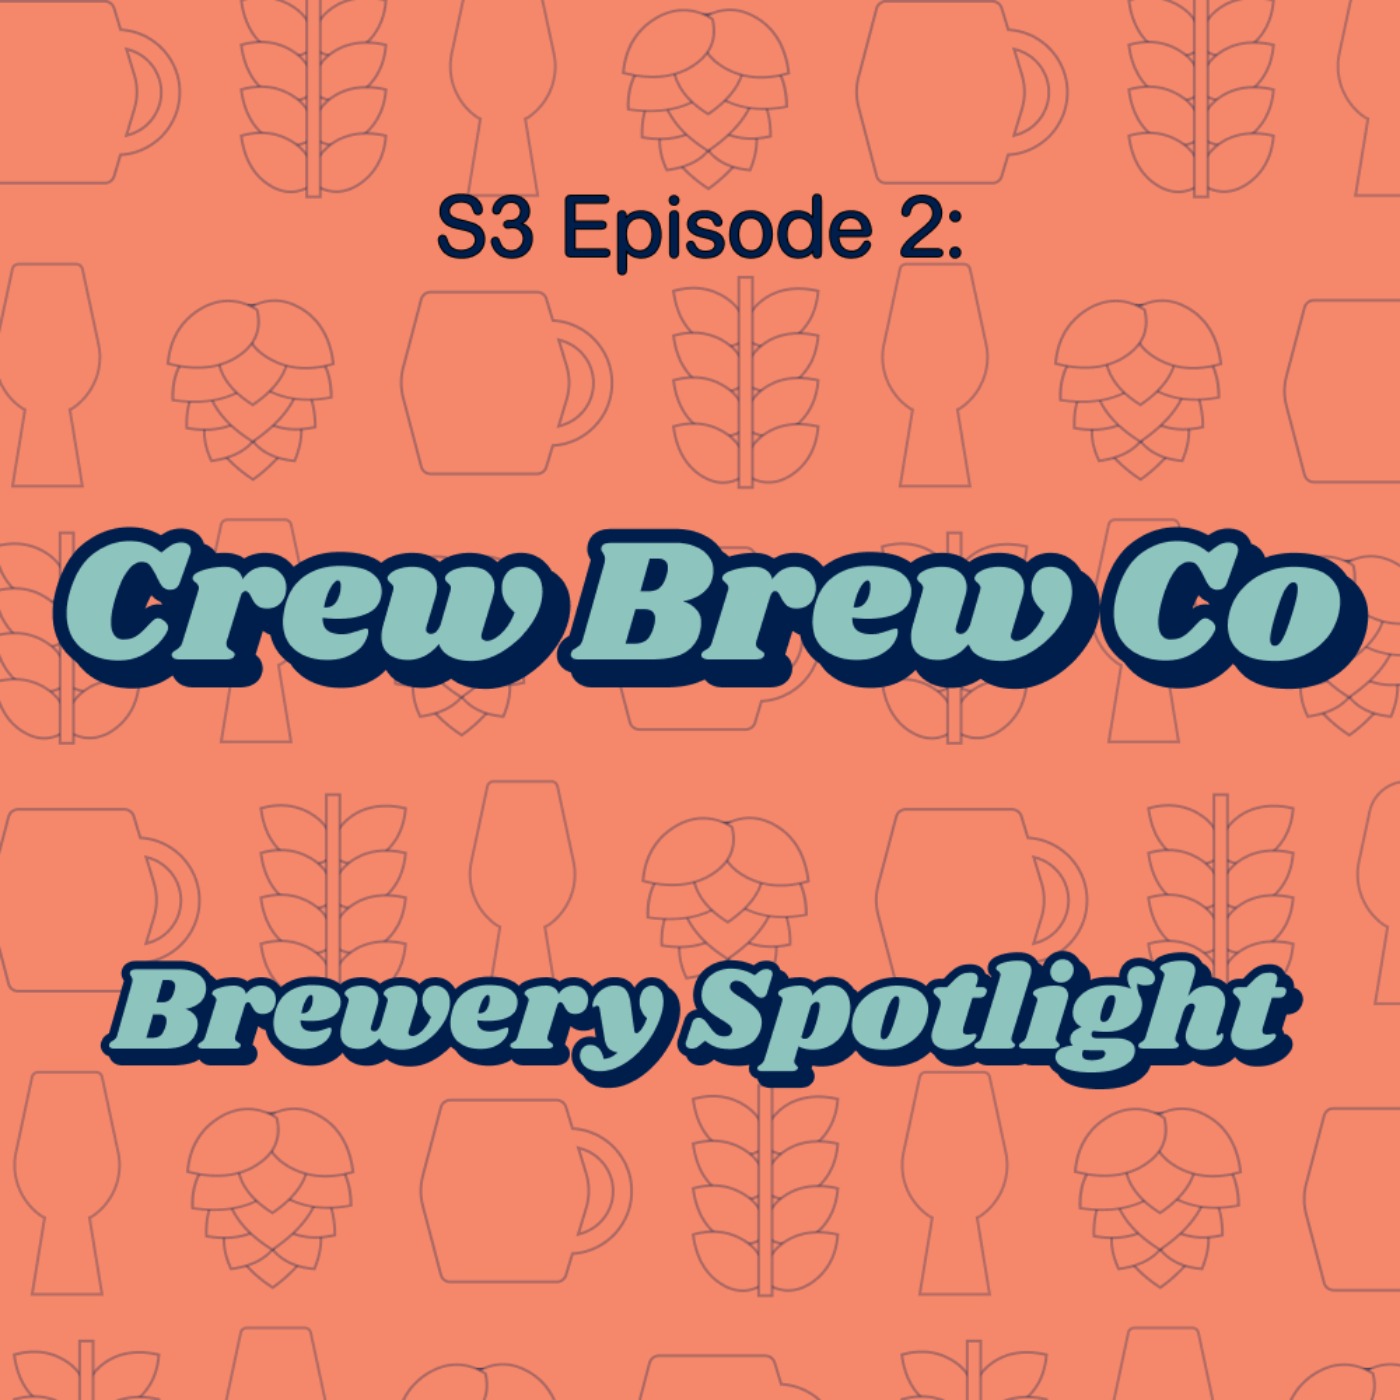 Crew Brew Co - Brewery Spotlight